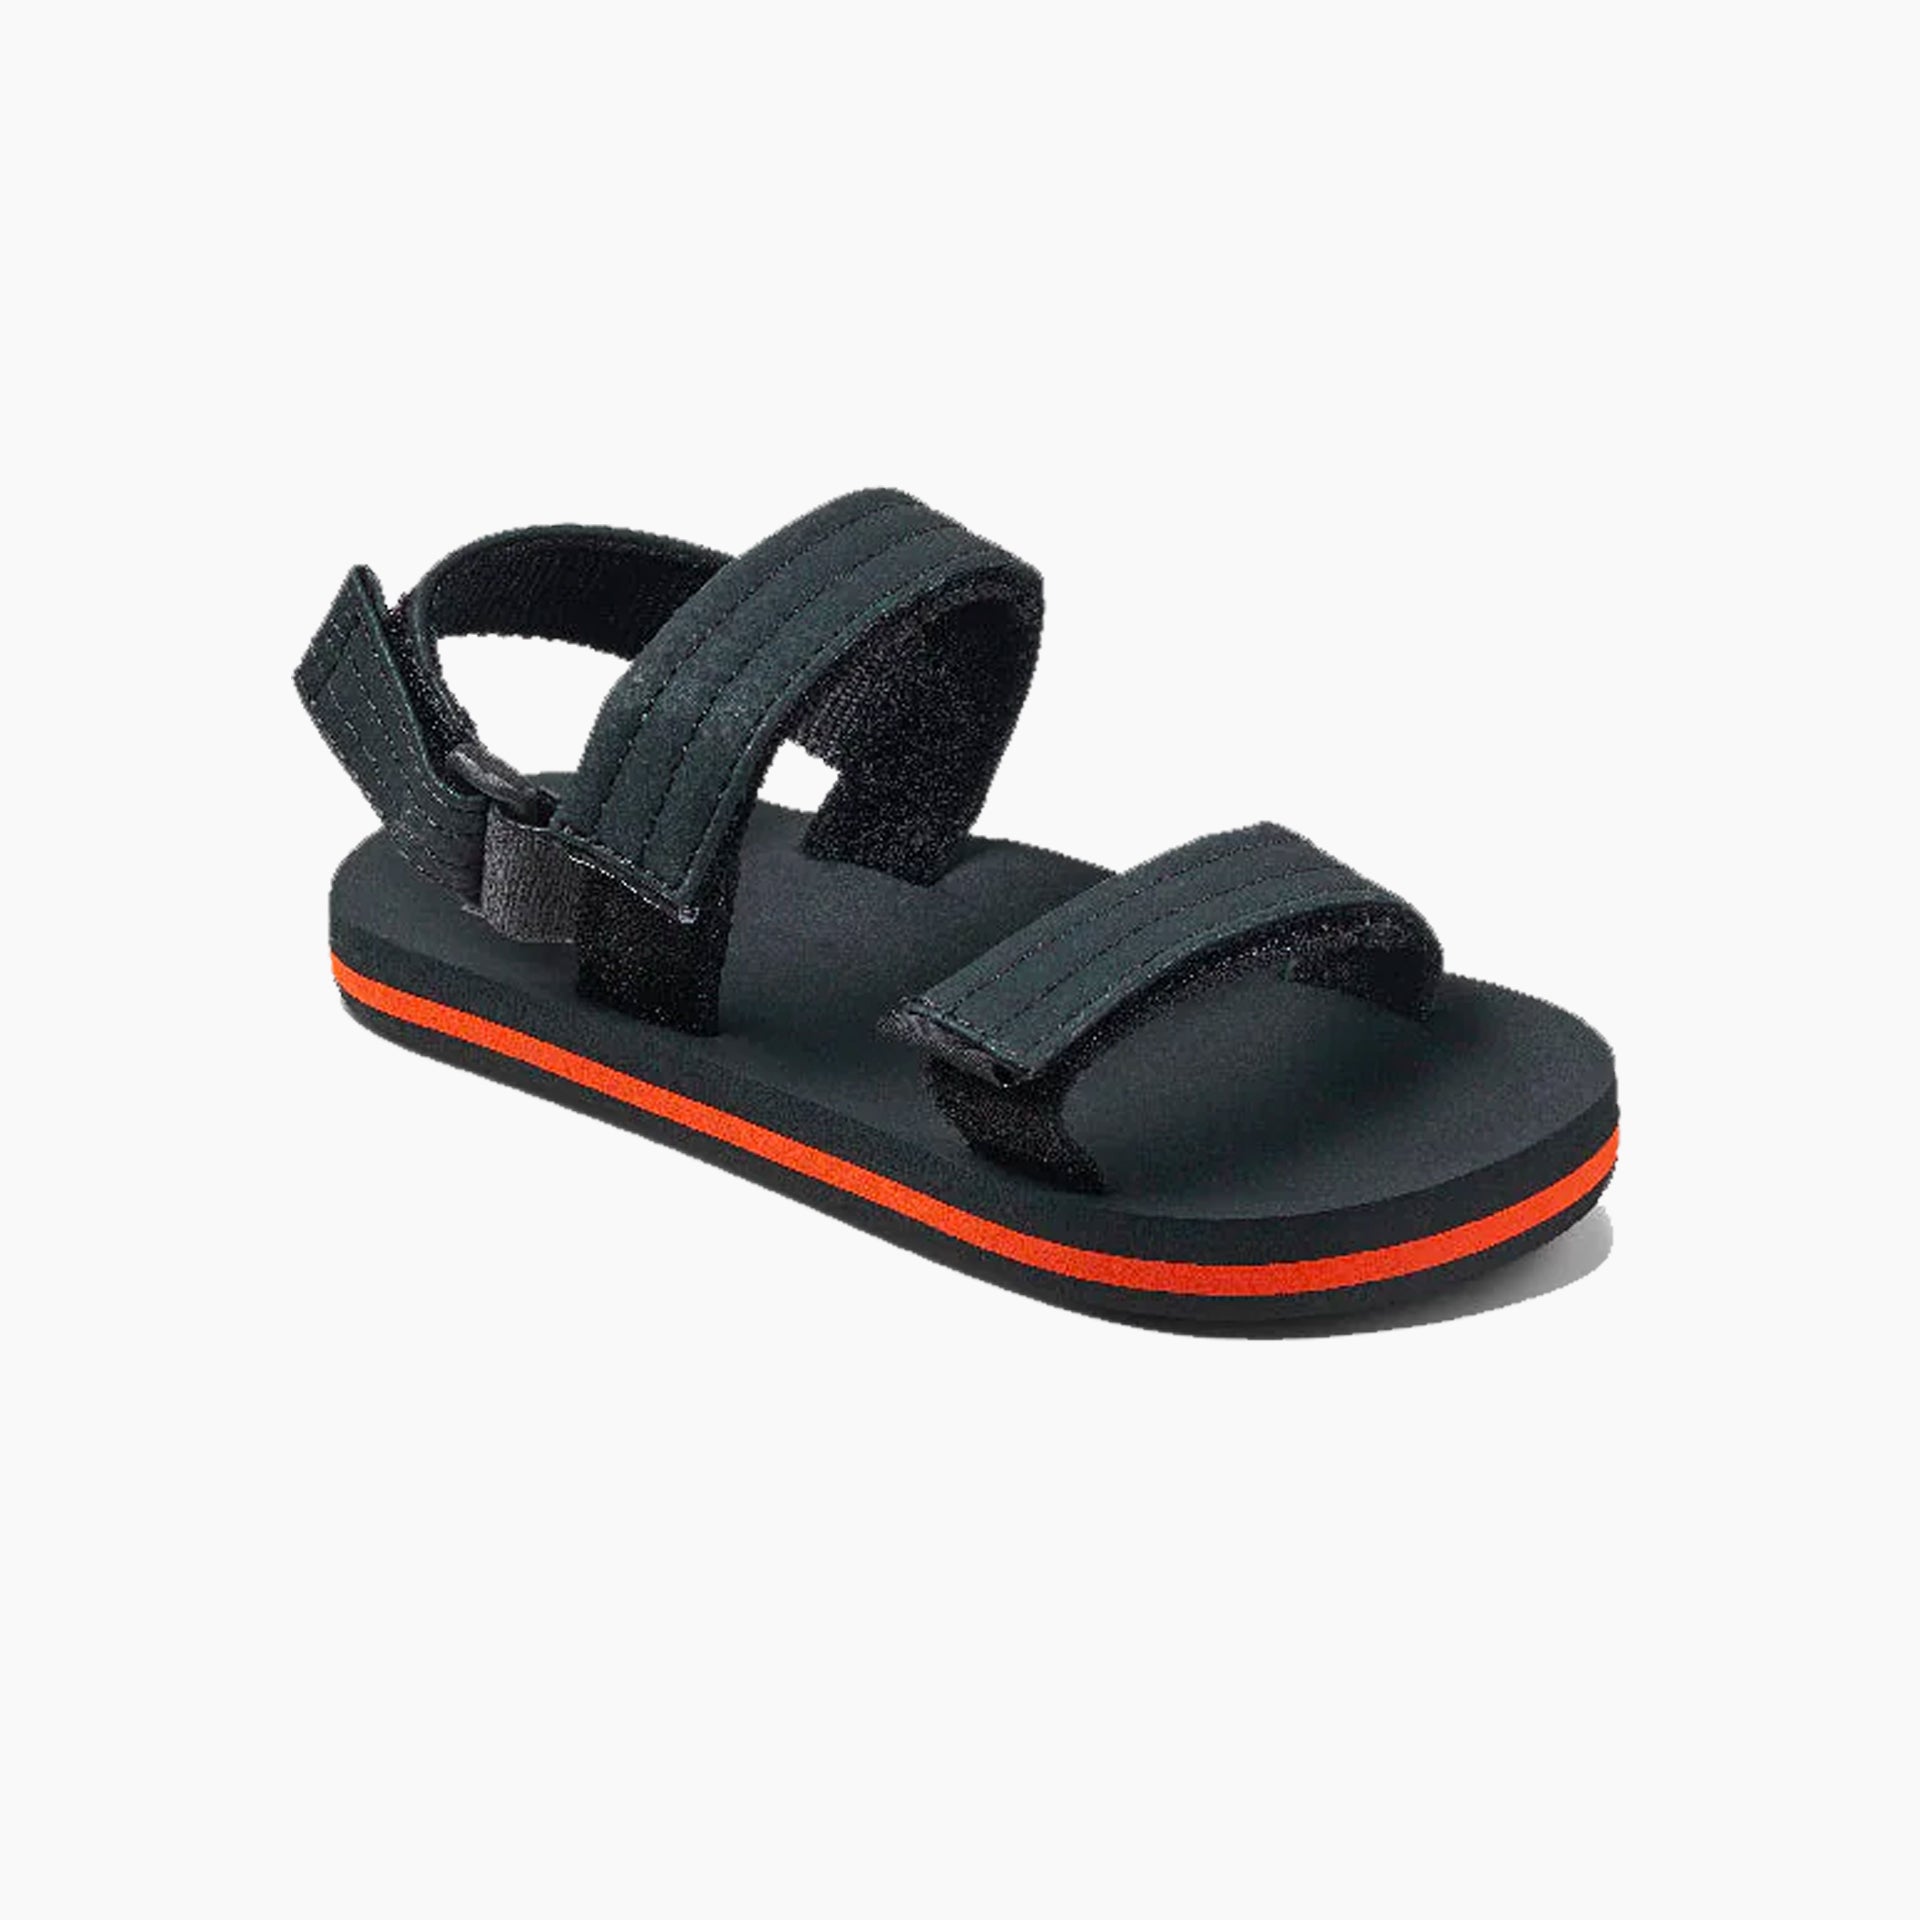 Reef Boys Little Ahi convertible Sandals - Black Orange - ManGo Surfing